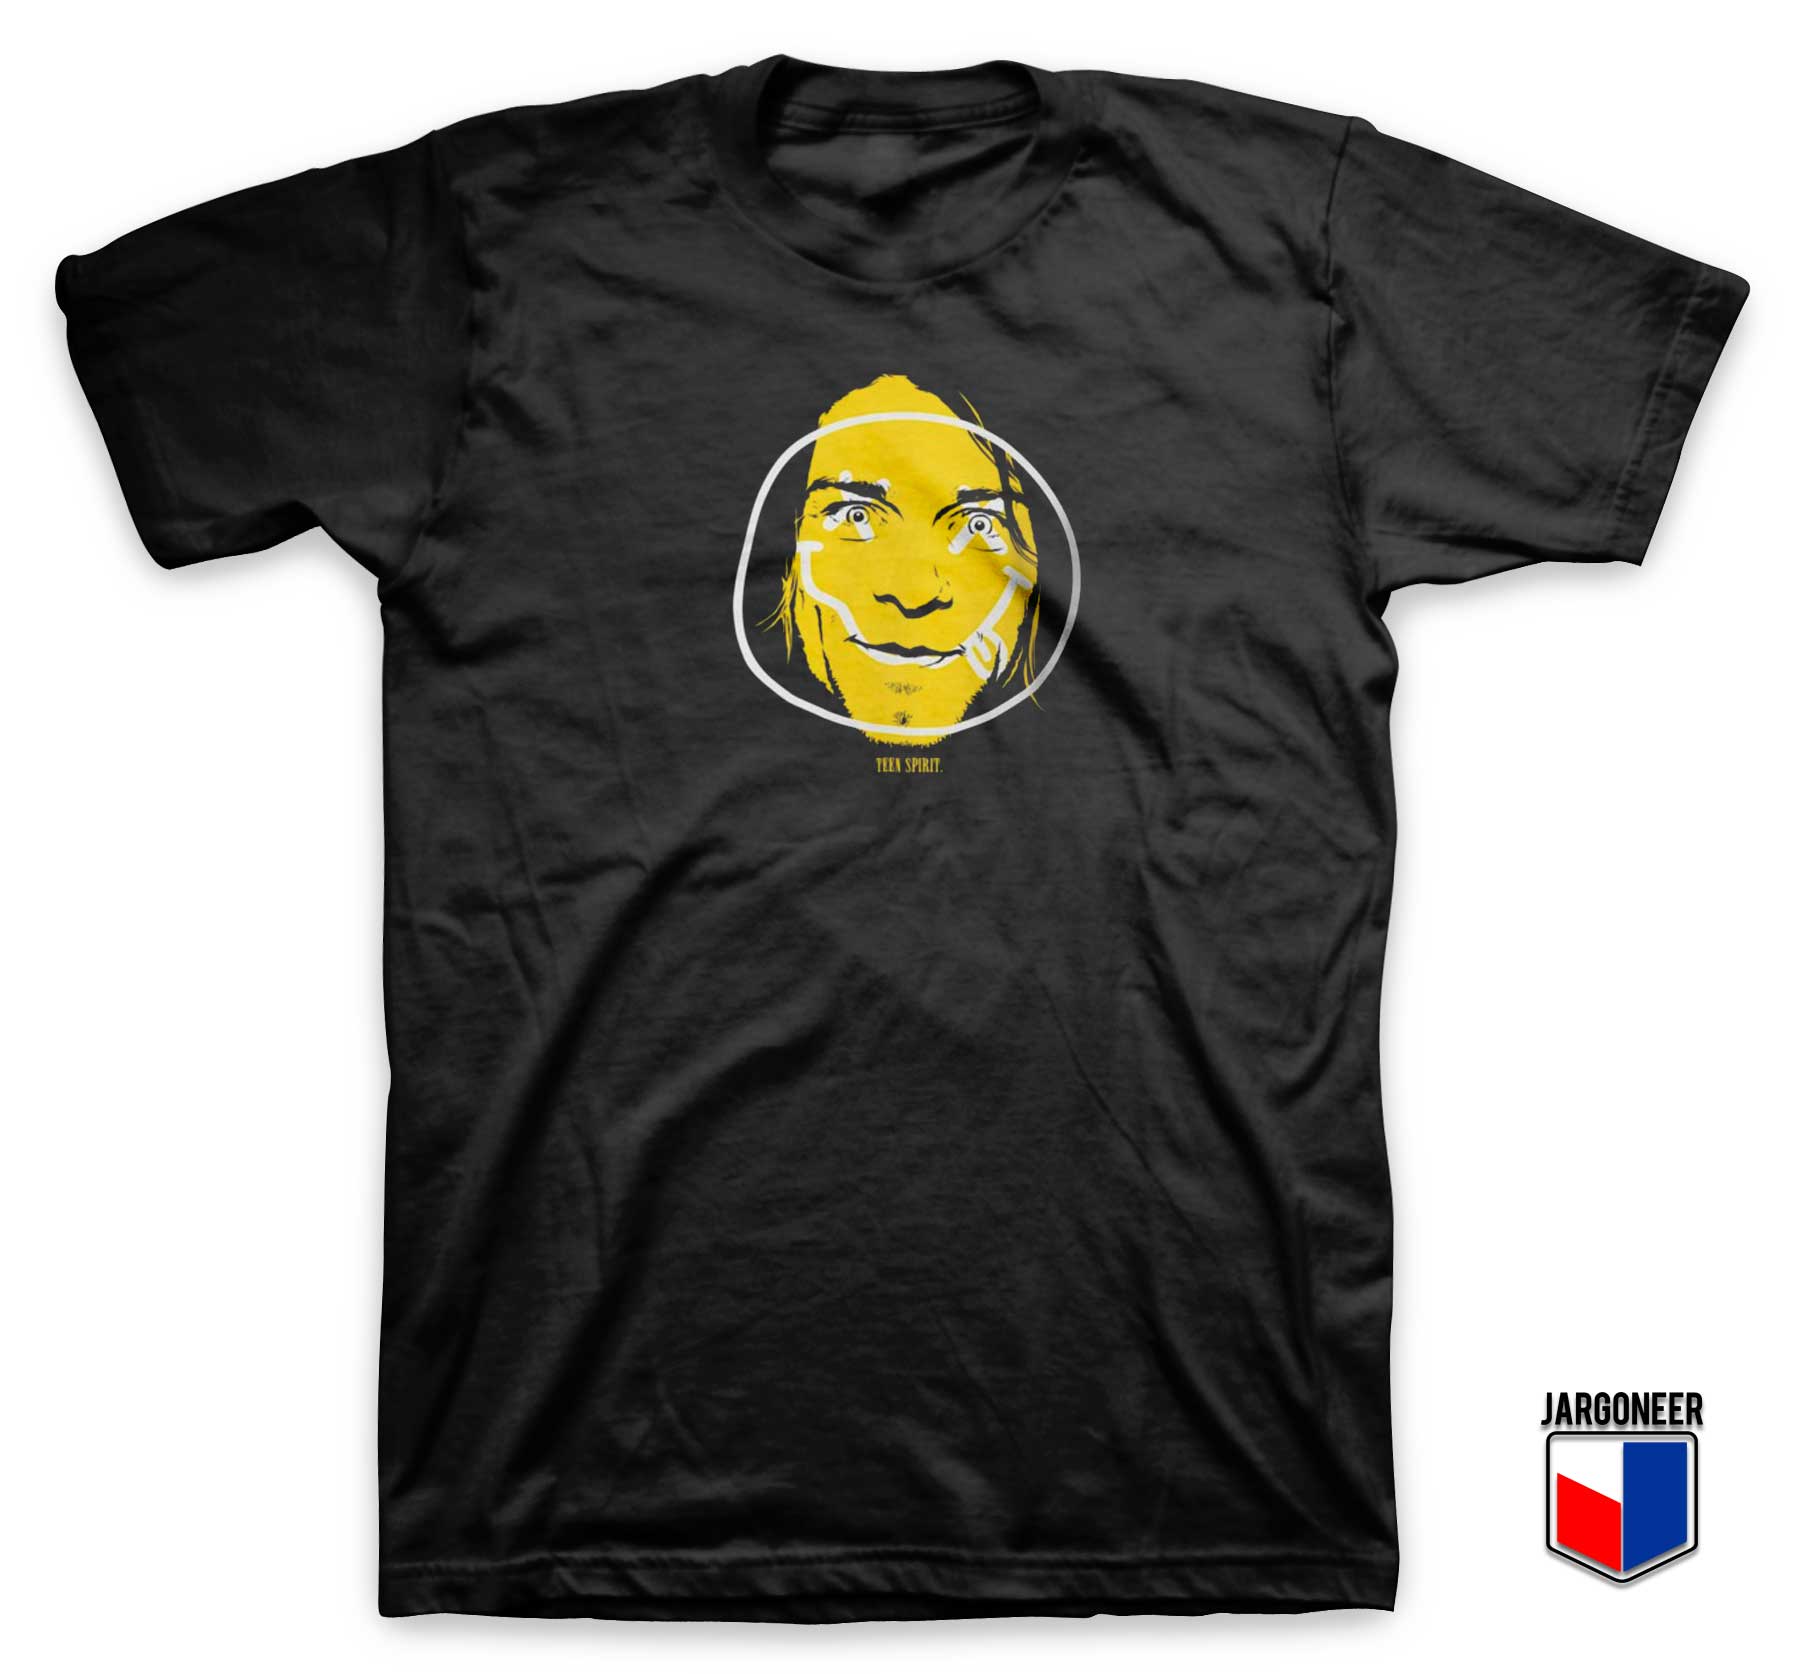 Teen Spirit Band T Shirt - Shop Unique Graphic Cool Shirt Designs